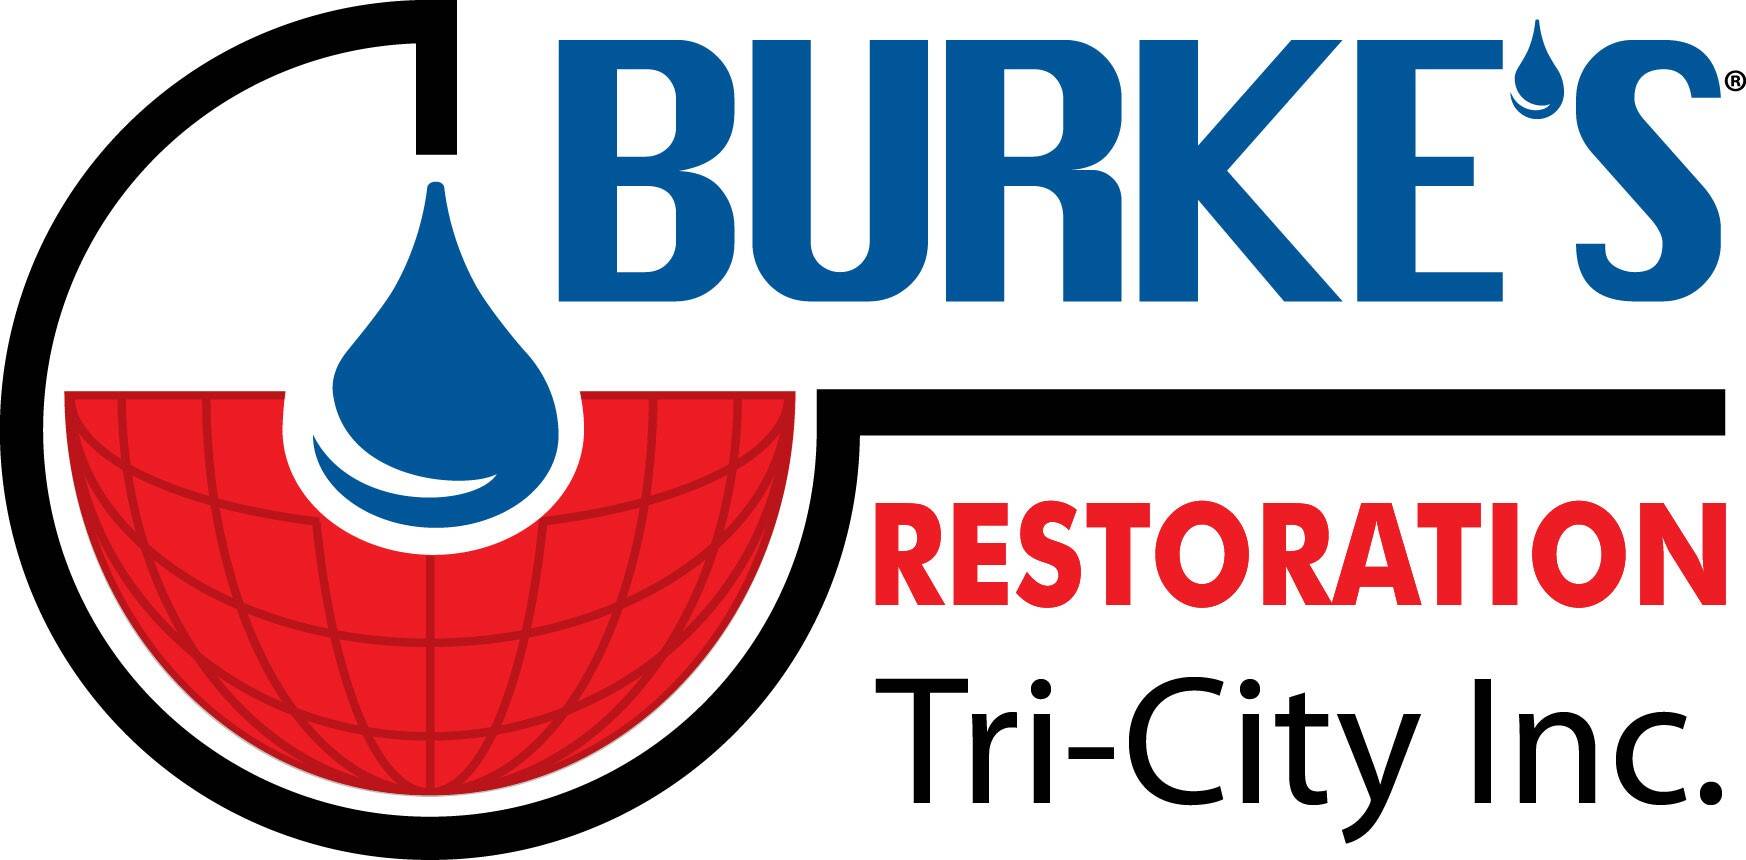 Burke's Restoration Tri-City Inc.